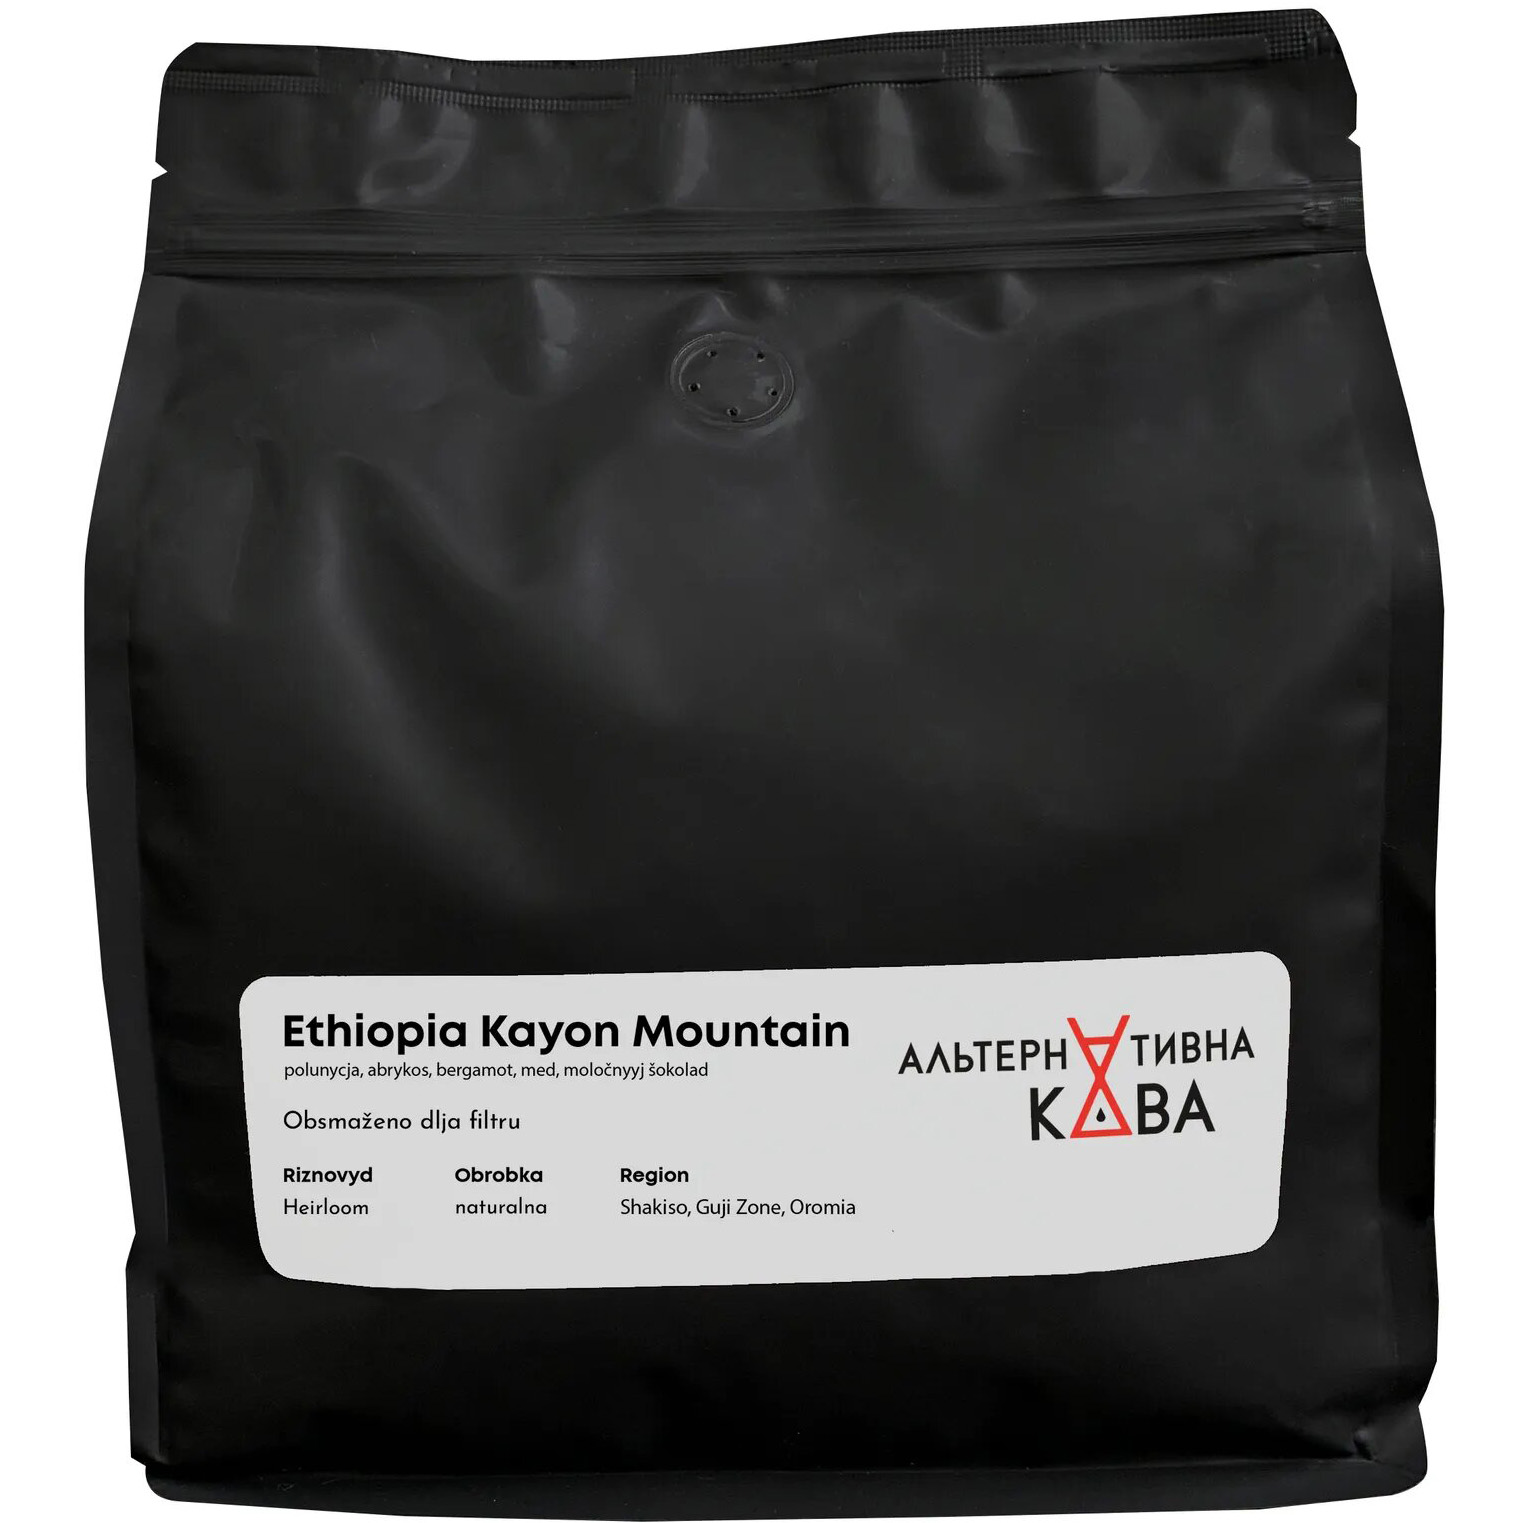 Кофе в зернах Альтернативна Кава Ethiopia Kayon Mountain арабика 1 кг - фото 1